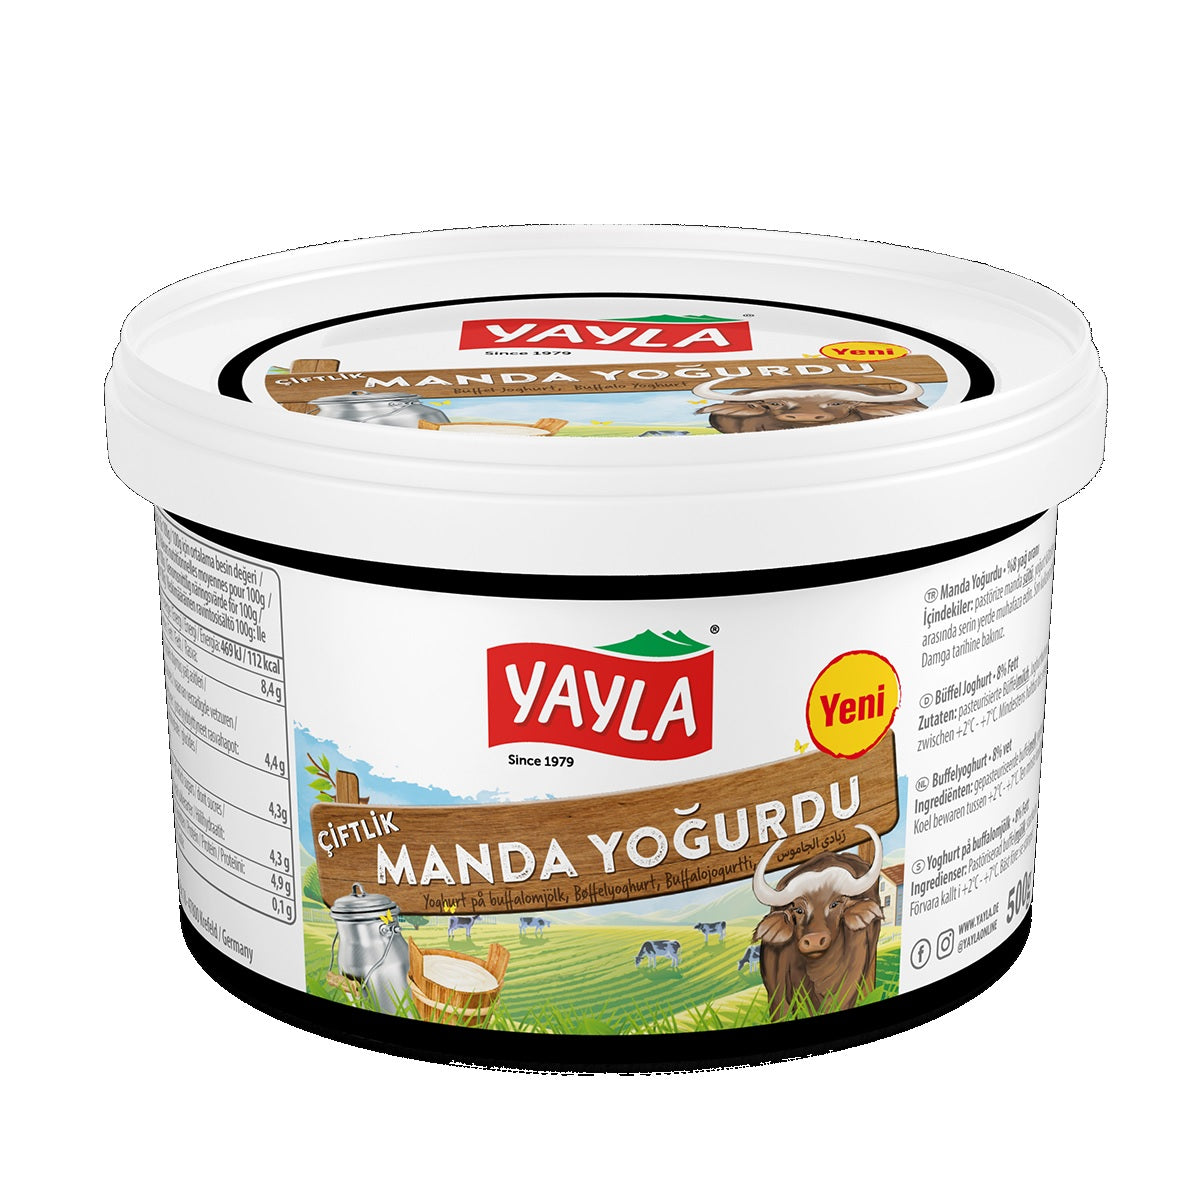 Yayla Manda Ciftlik Buffalo Yogurt 500g — Best Grocery